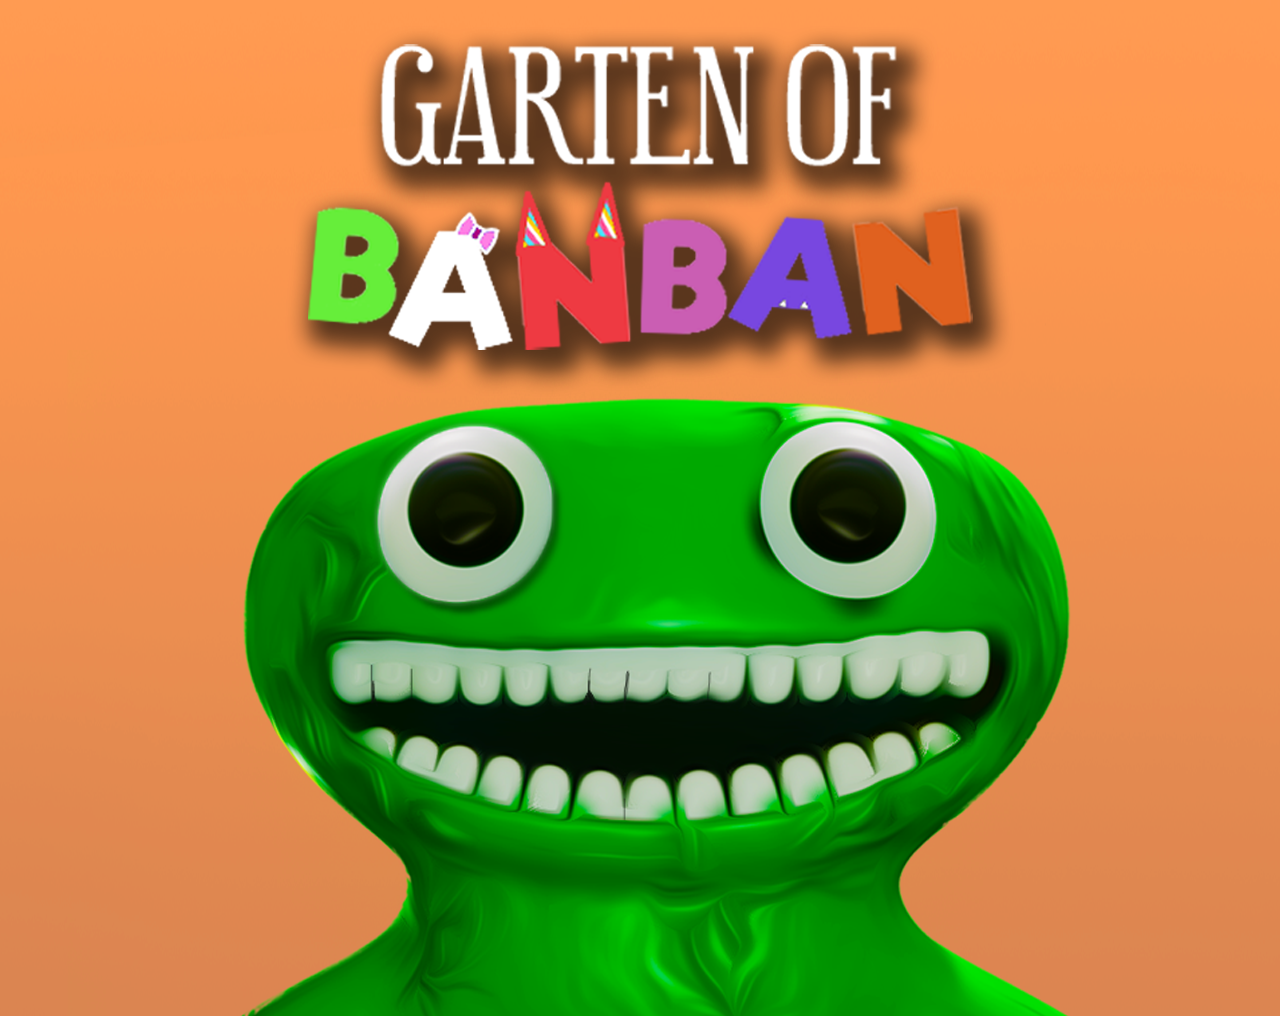 Garten of Banban 3  Download and Buy Today - Epic Games Store